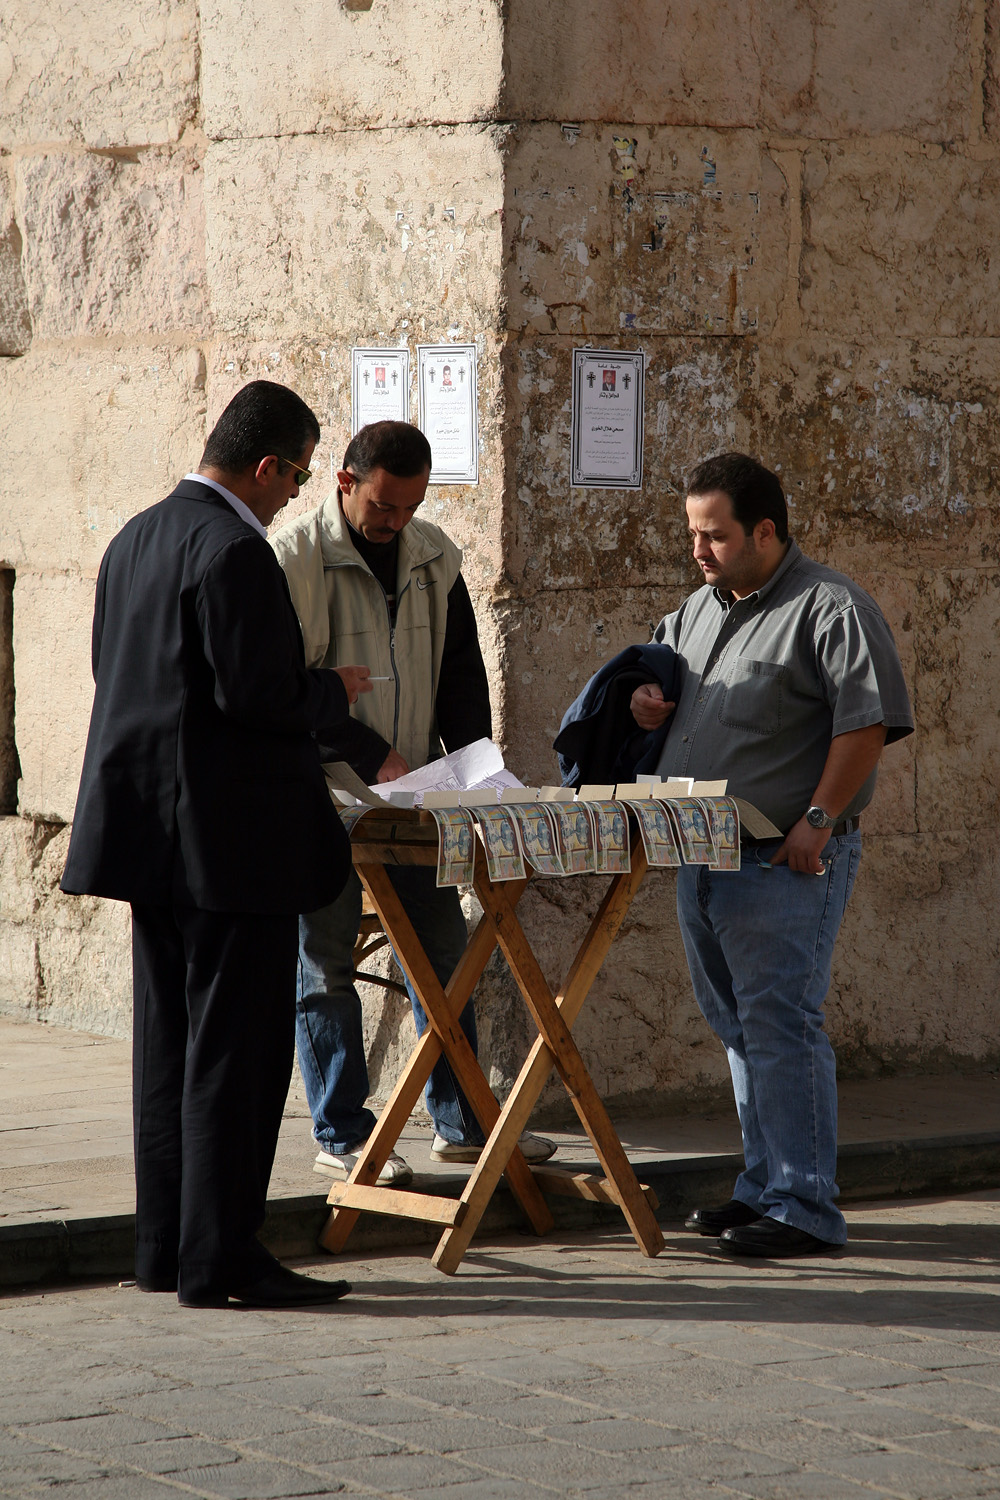 bill-hocker-lottery-vendor-bad-shari-christian-quarter-damascus-syria-2008